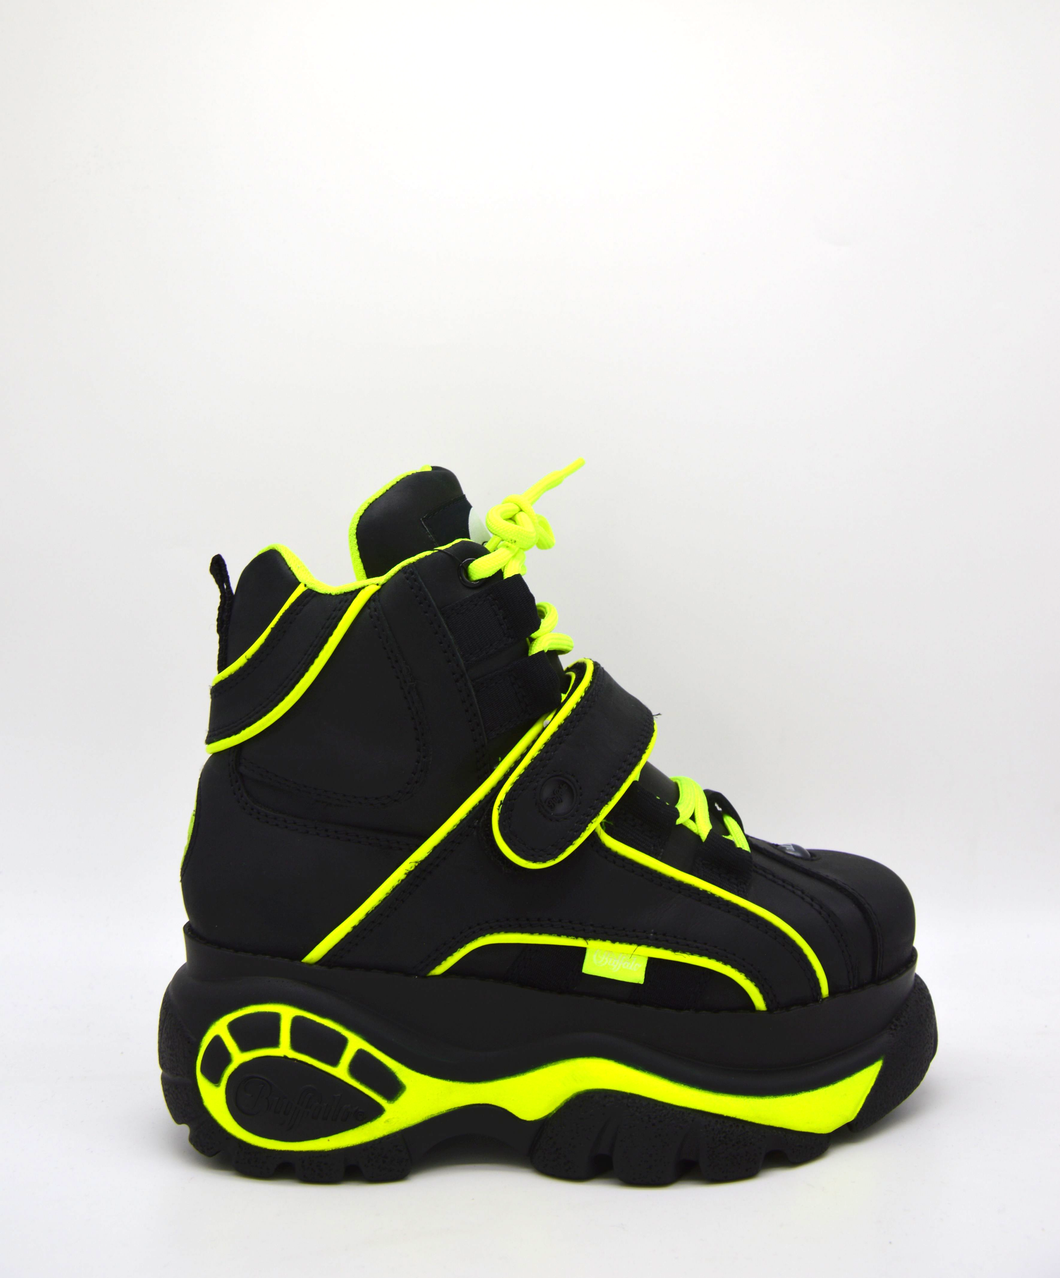 Buffalo London Classic Boots Shoes Plateau Schuhe 90er NEON Yellow 1348-14 2.0 (Limited by ModeRockCenter)